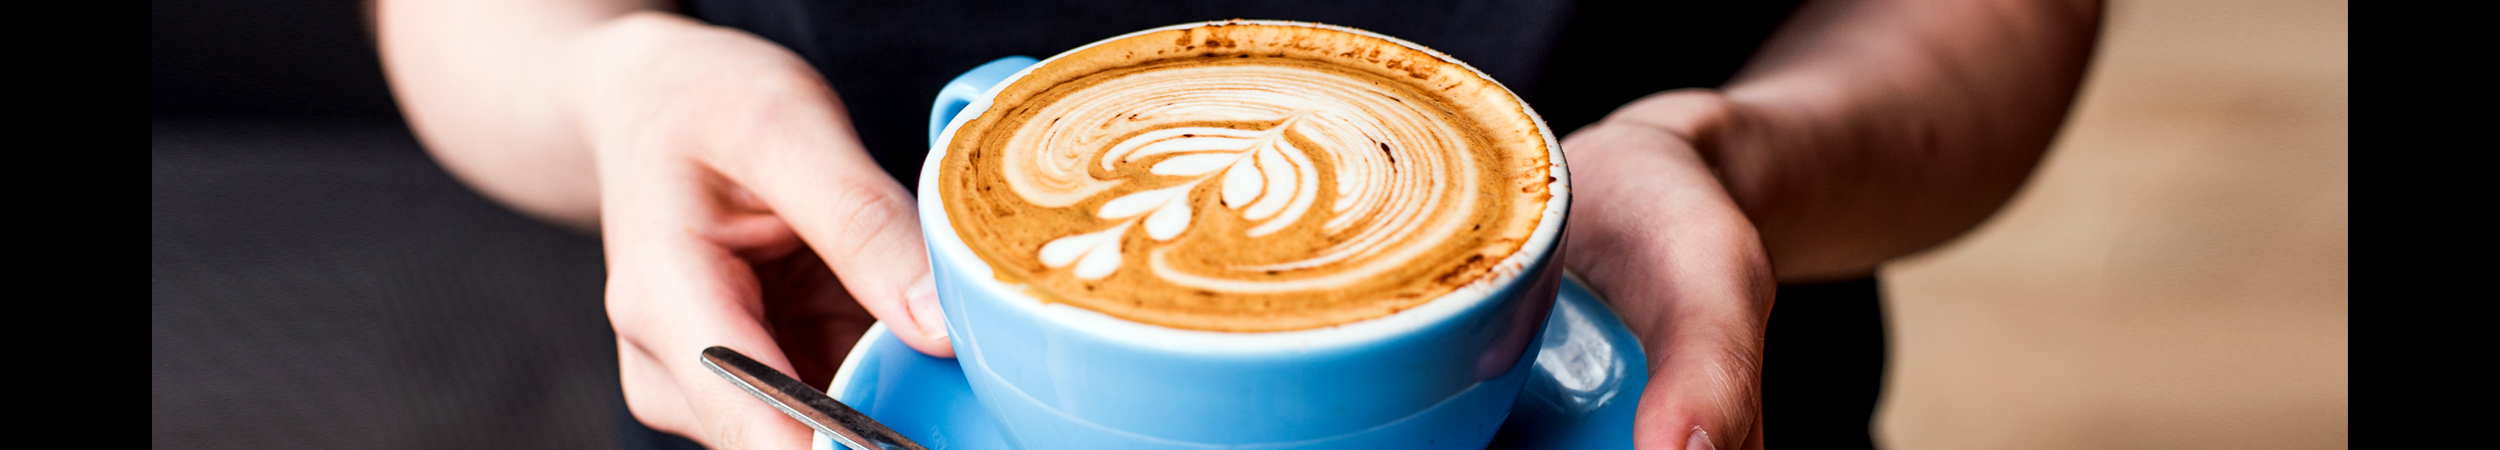 Latte art in Coffee Cup